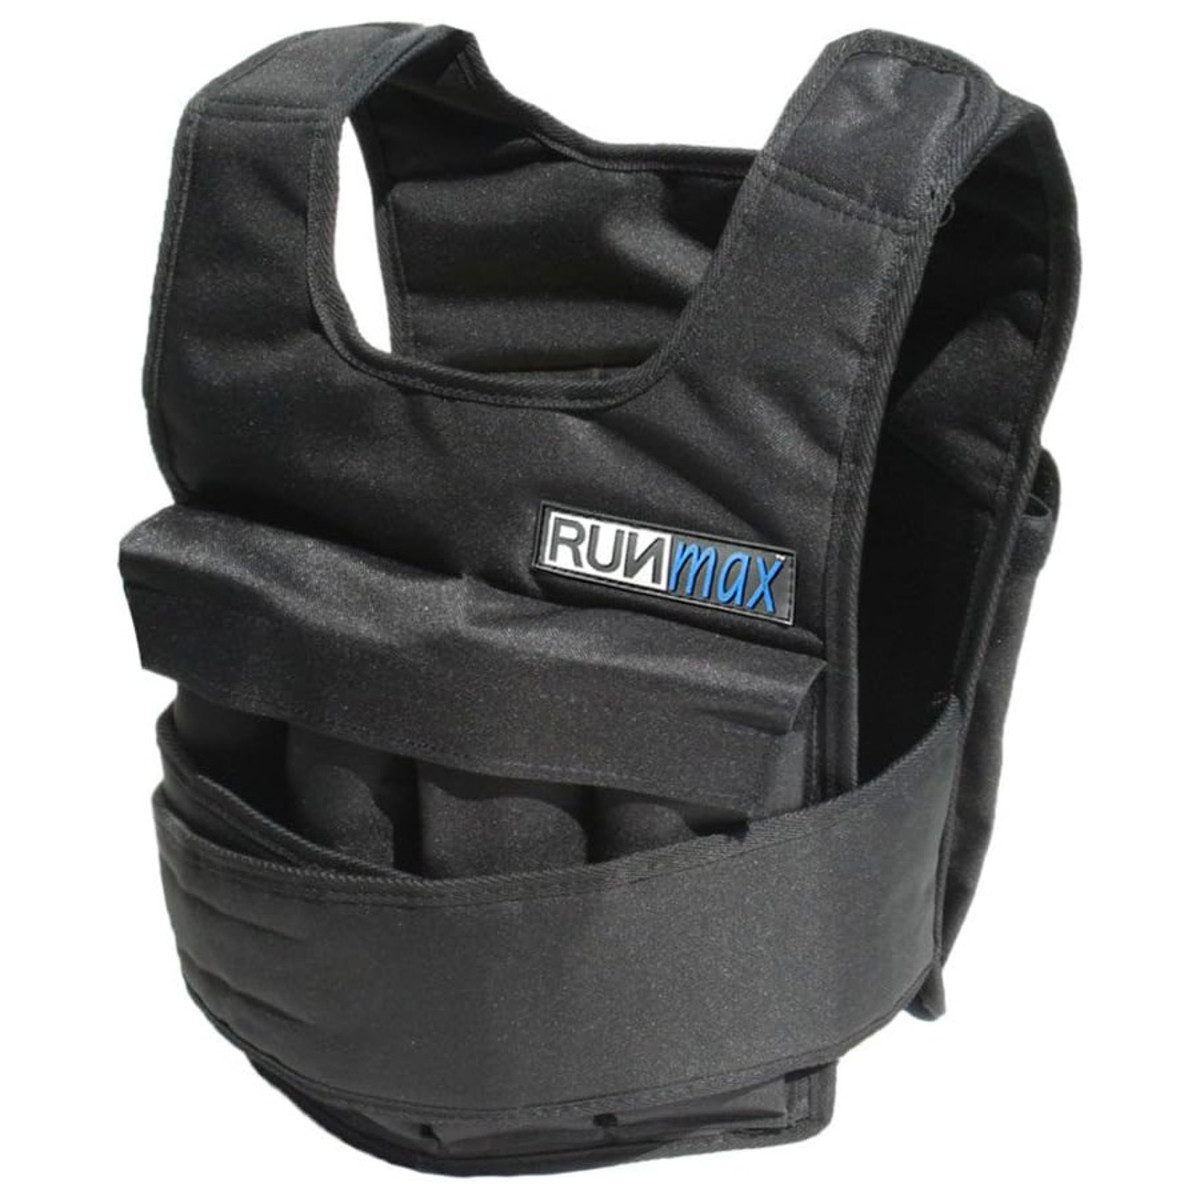 https://www.mensjournal.com/.image/t_share/MjAxNzI0MTM2NTg5MjQwMDg0/runmax-adjustable-weighted-vest.jpg